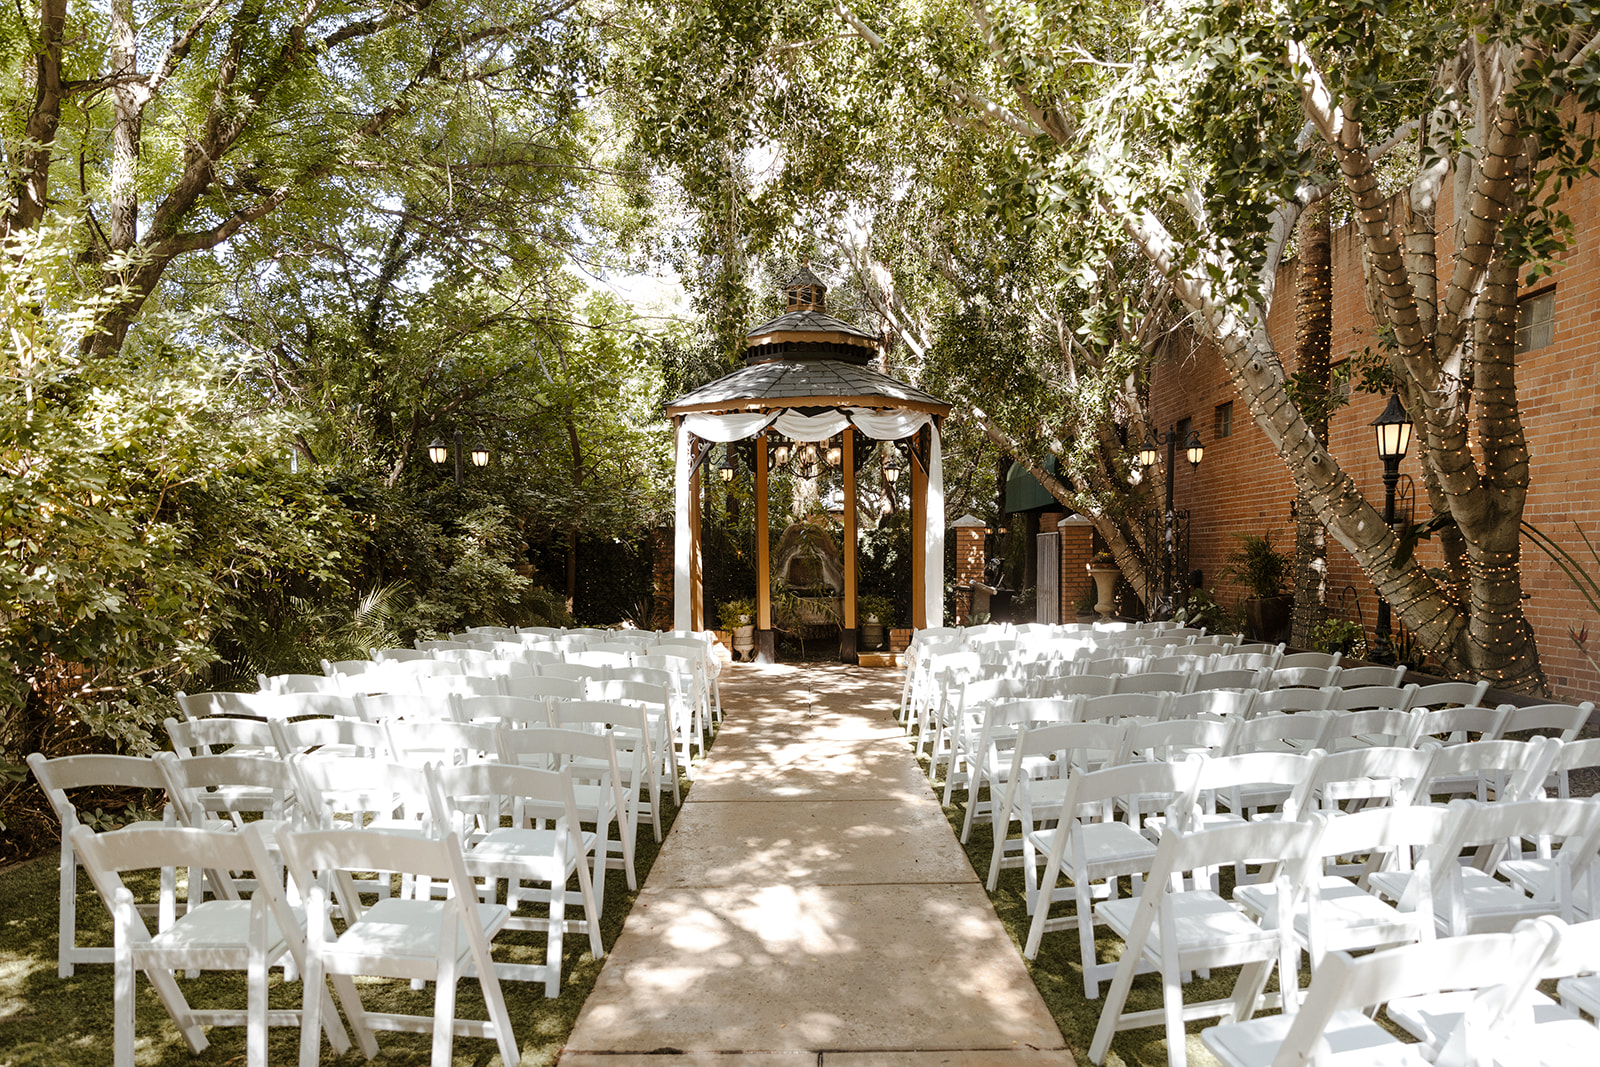 The beautiful Regency Garden sits ready for the stunning Arizona wedding day!